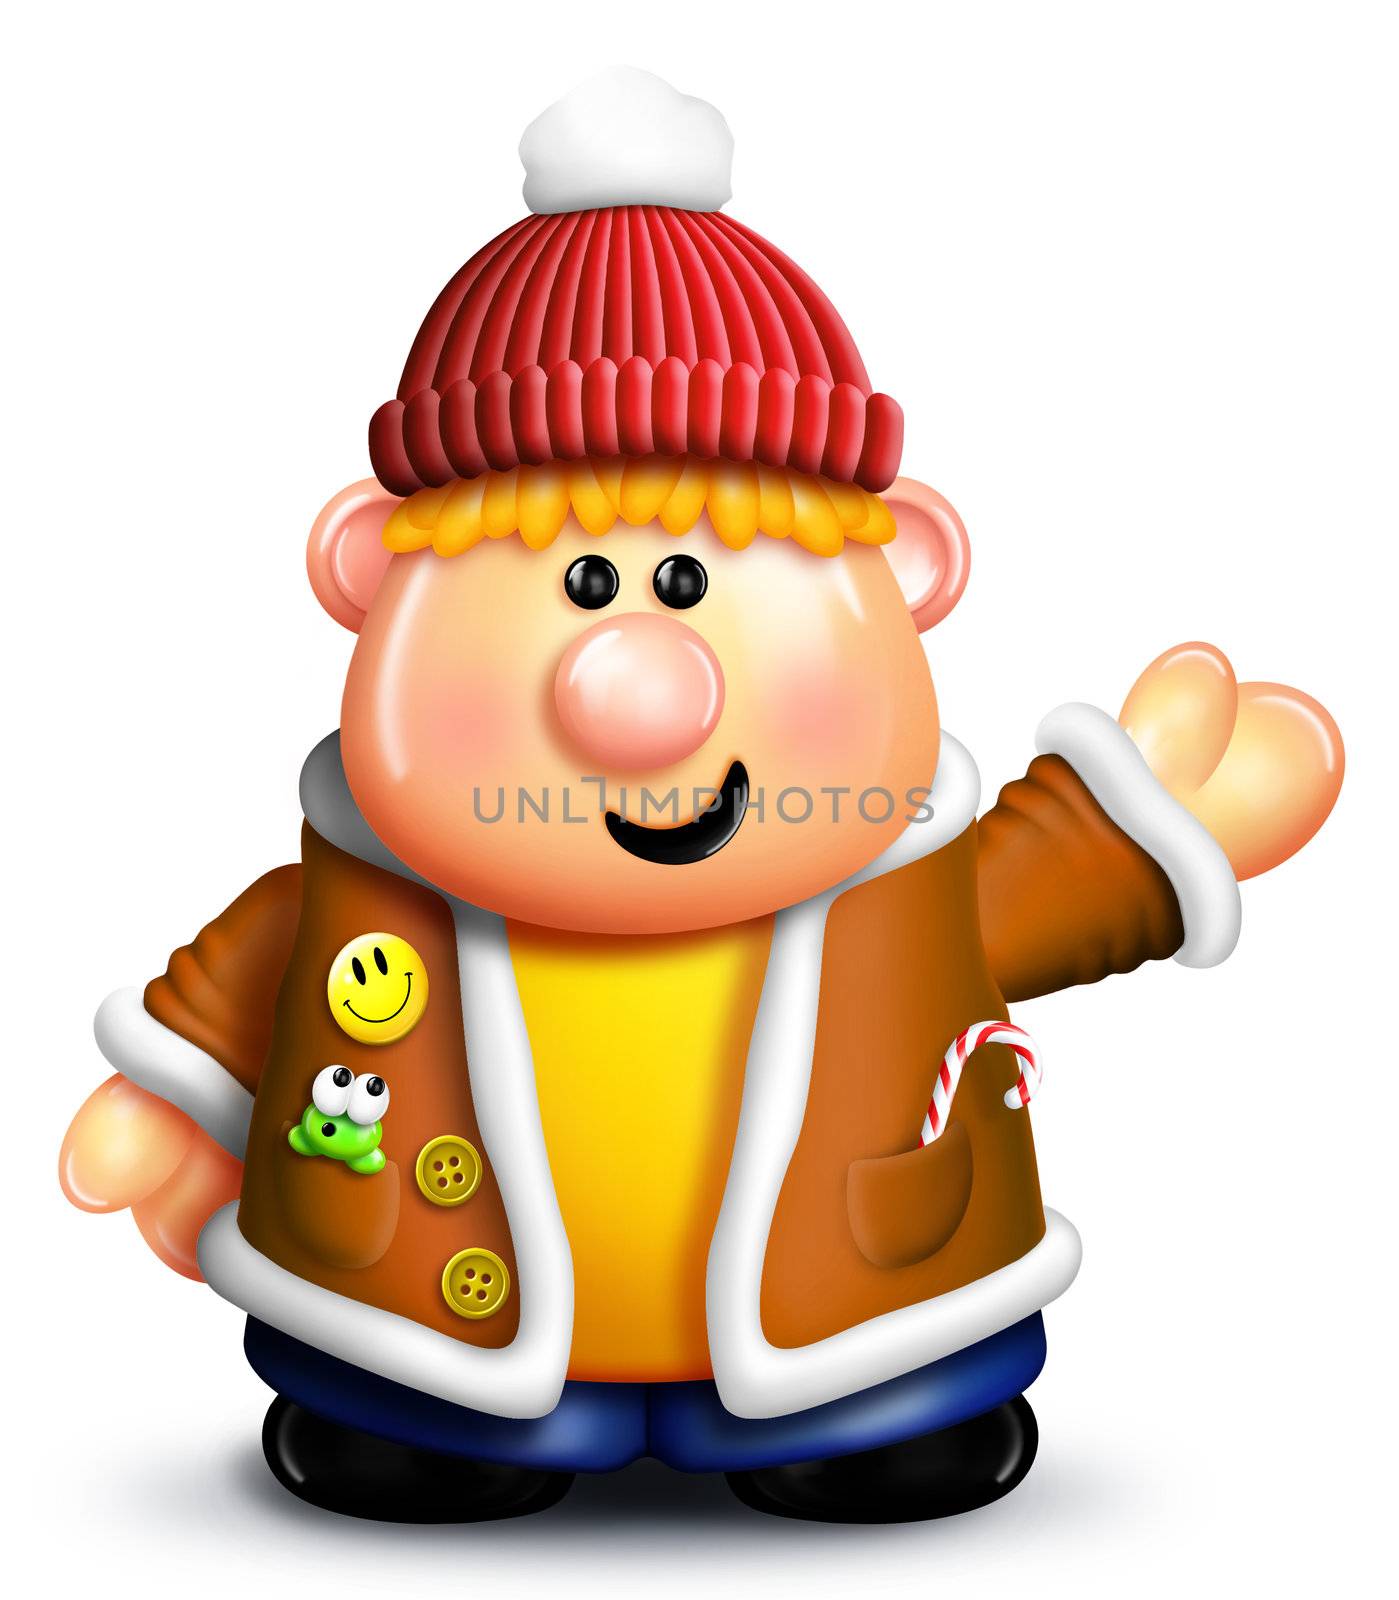 Whimsical Cartoon Boy in Winter Clothing by komodoempire